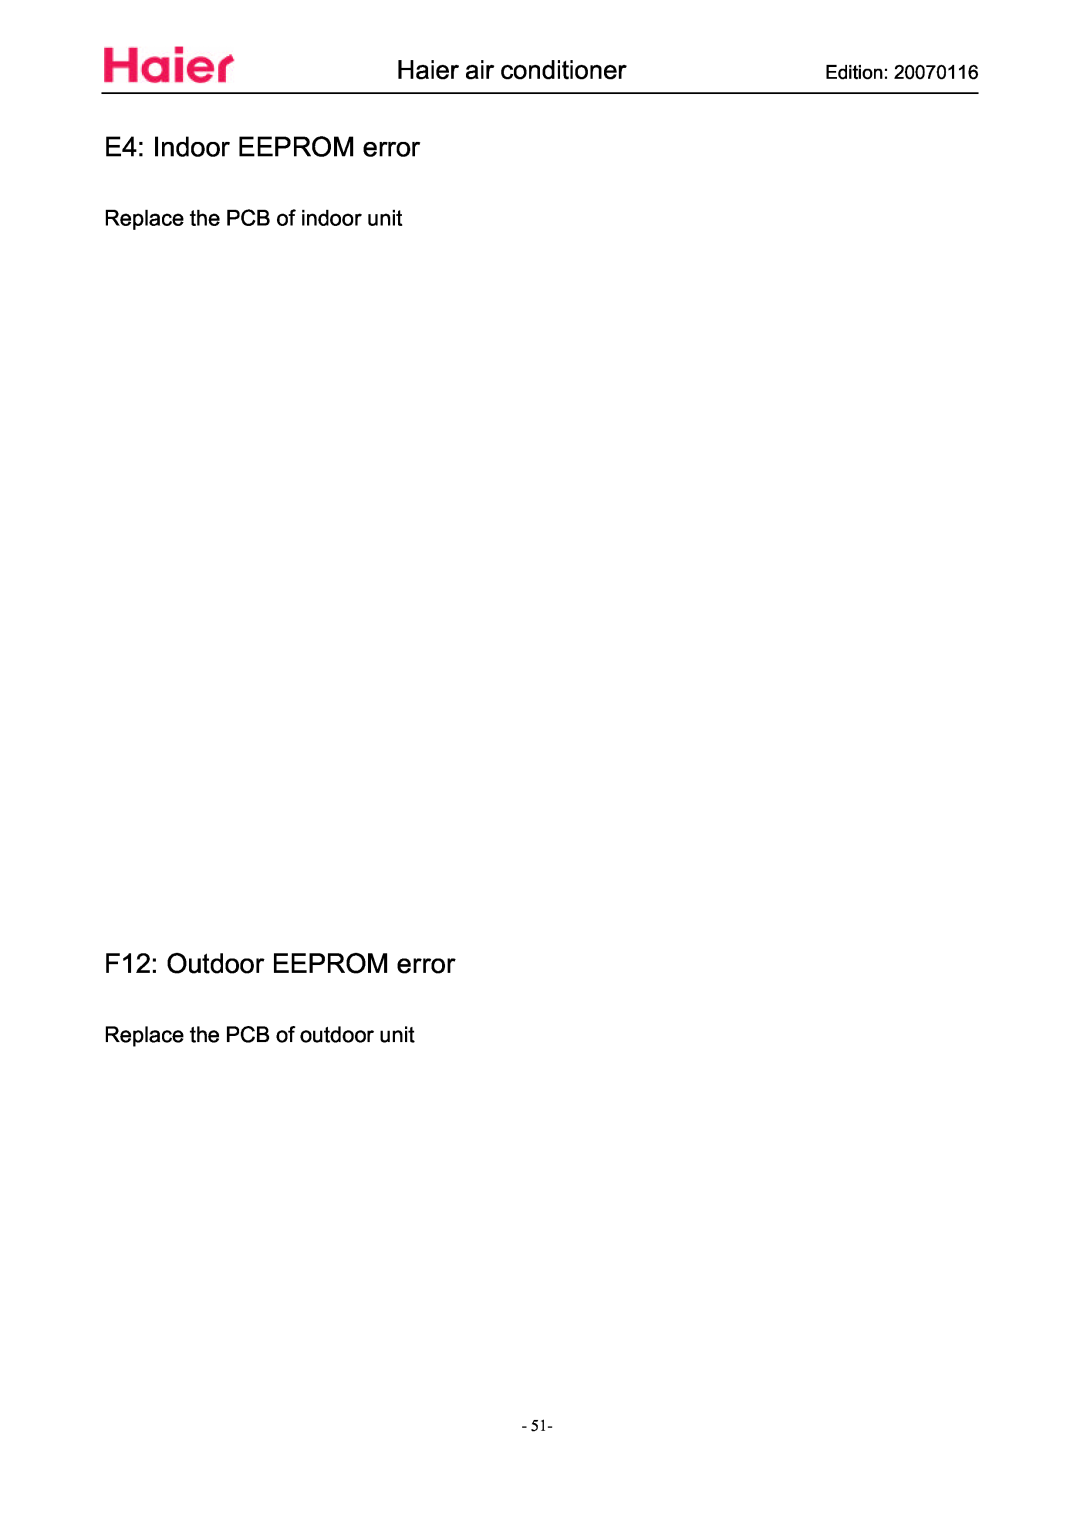 Haier HSU-12HSA03/R2(DB) manual E4: Indoor EEPROM error, F12: Outdoor EEPROM error, Replace the PCB of indoor unit, Edition 